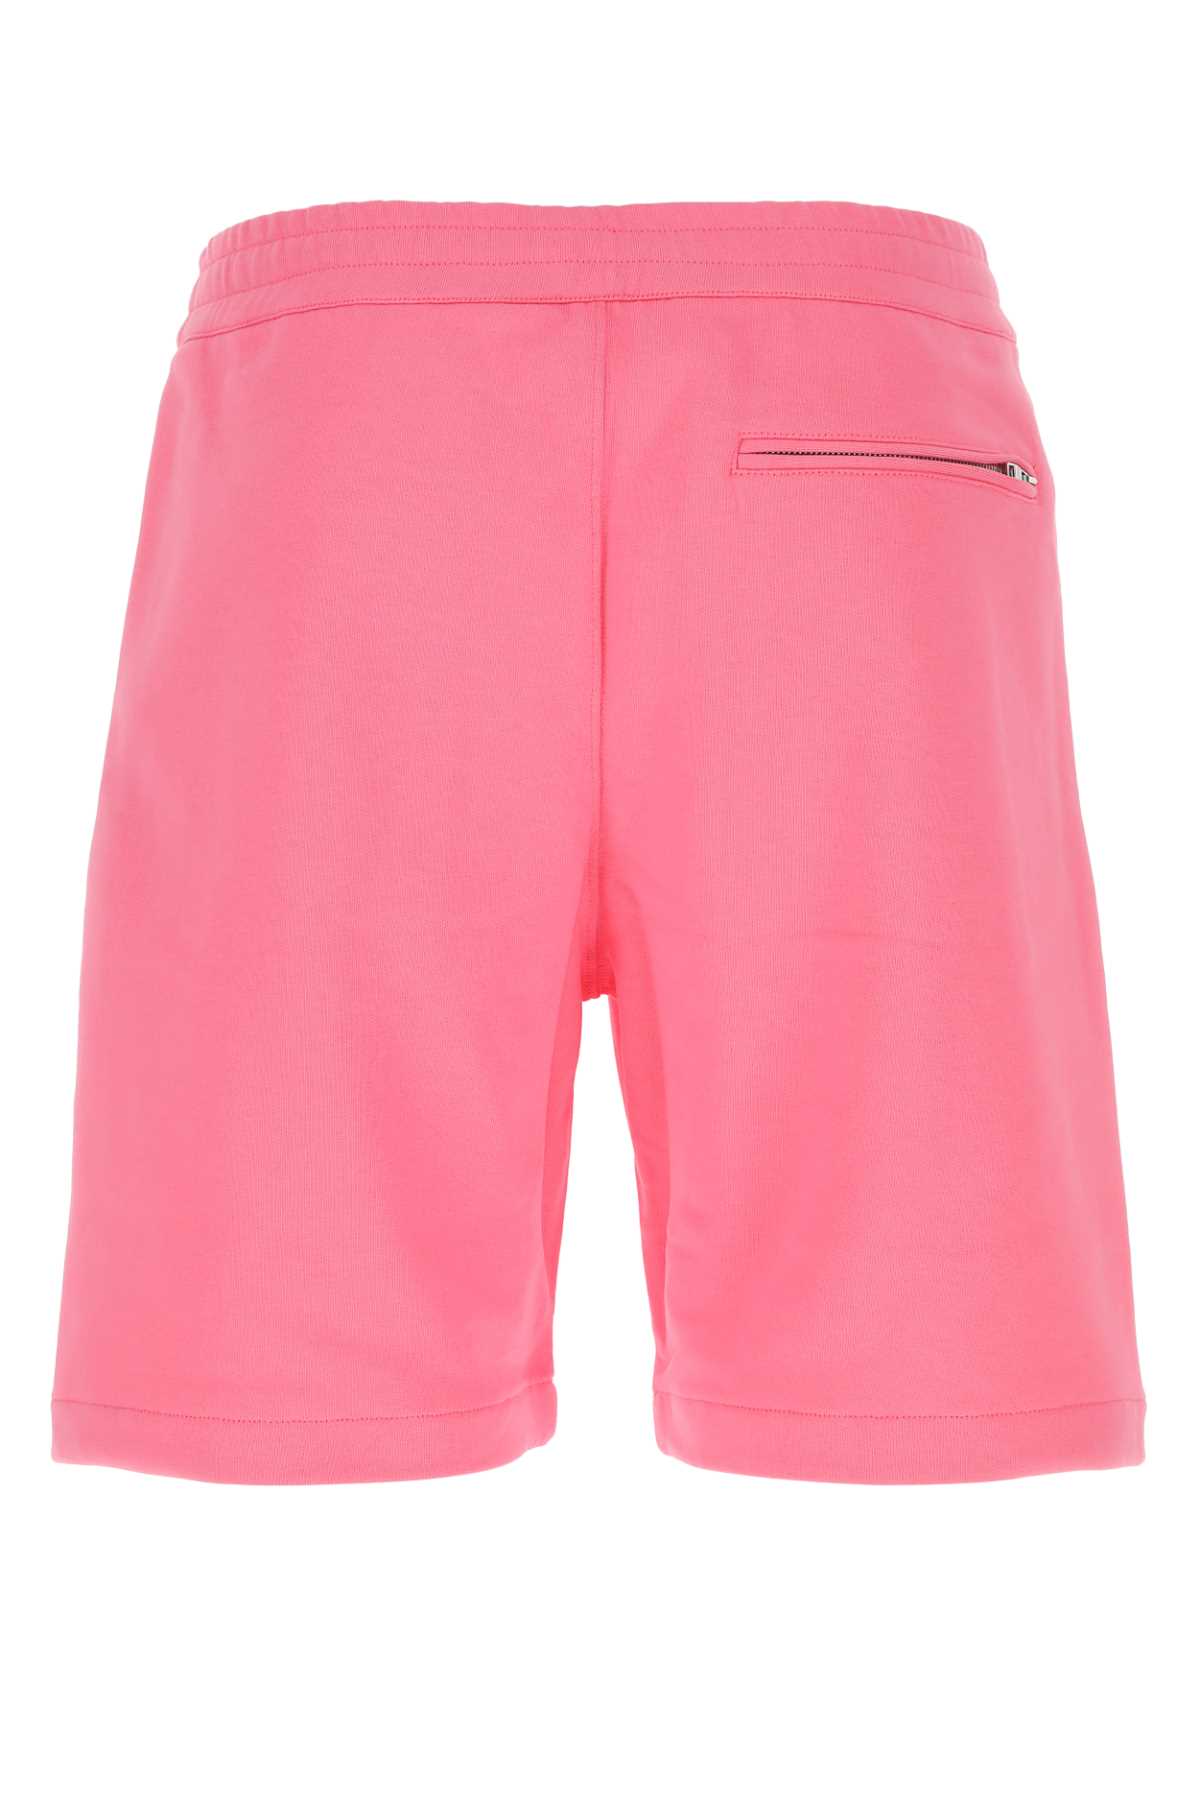 Alexander Mcqueen Pink Cotton Bermuda Shorts In 0917